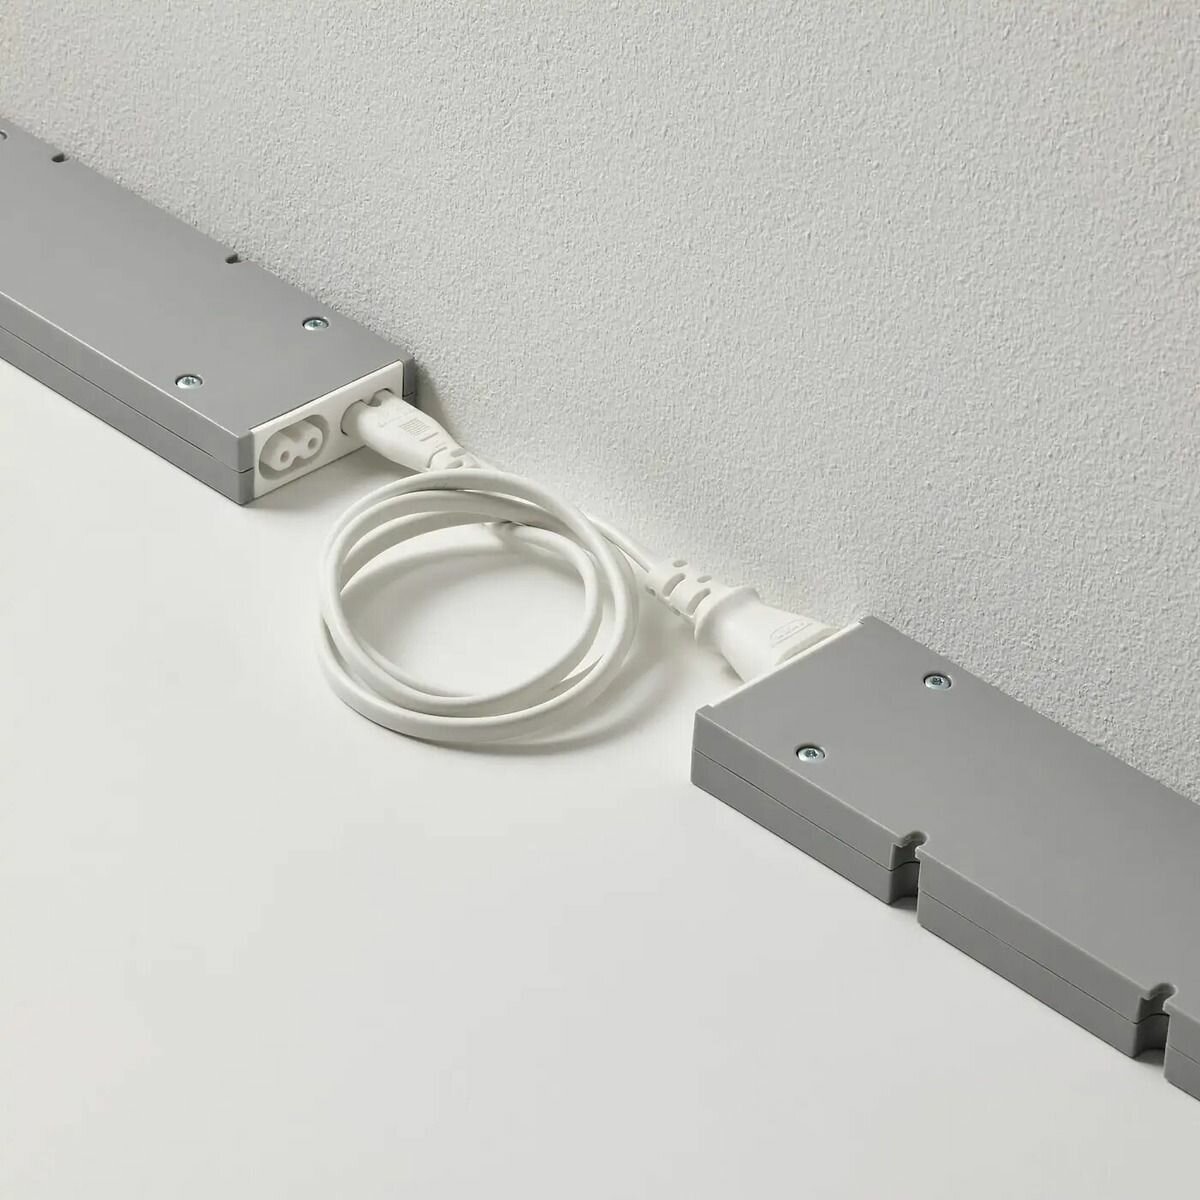 Cоединительн кабель IKEA FORNIMMA фёрнимма 07 м